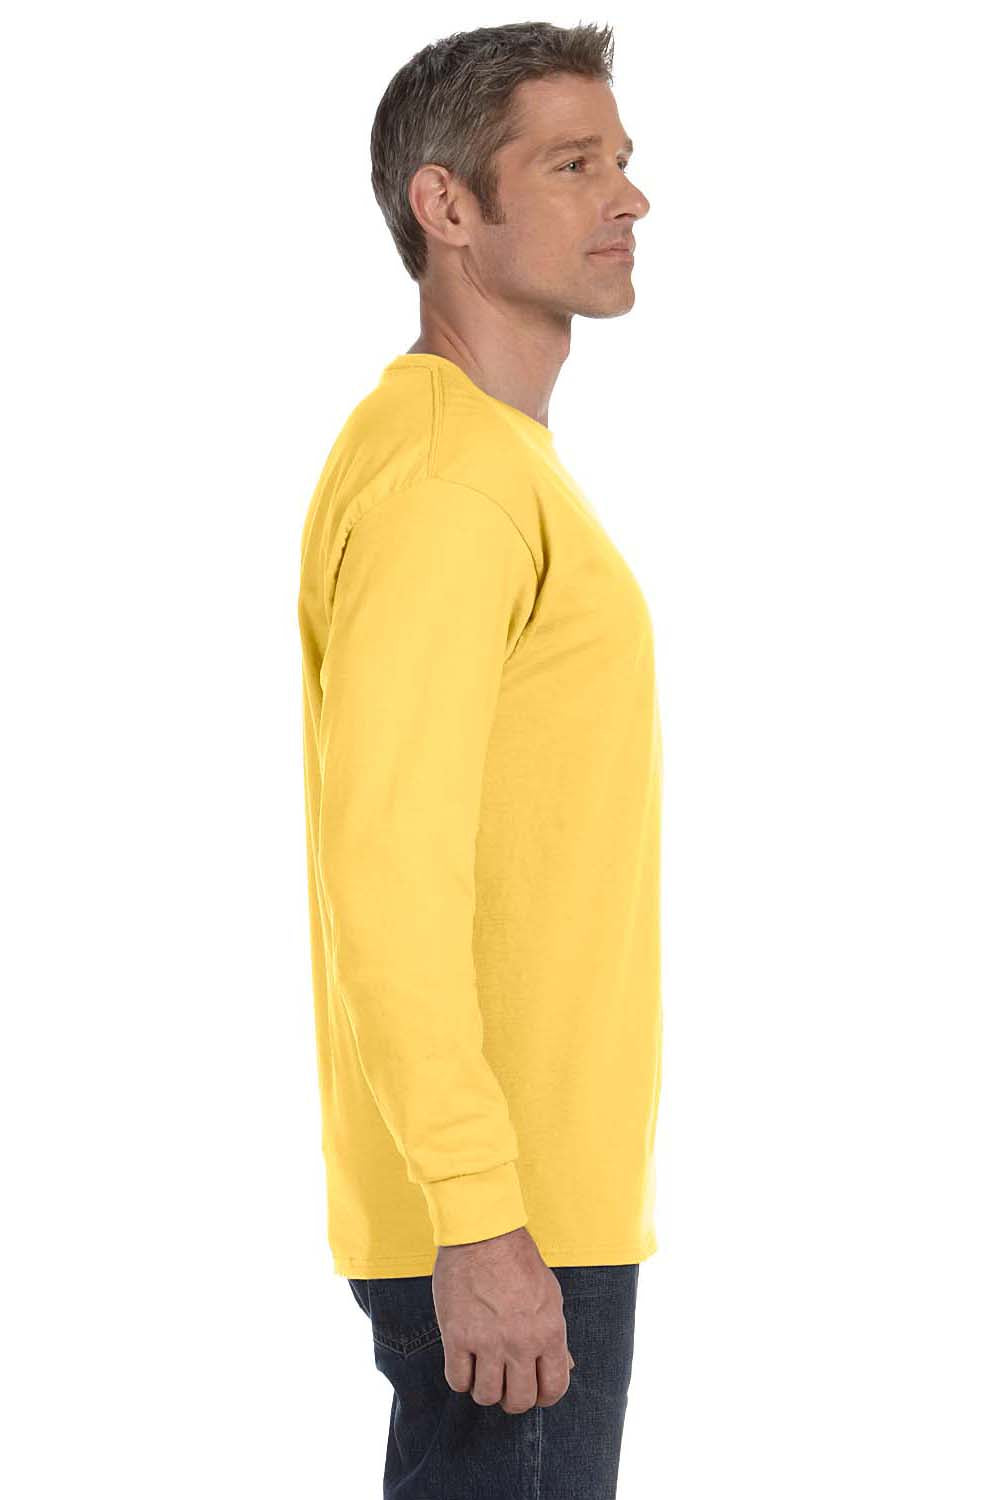 Jerzees 29L Mens Dri-Power Moisture Wicking Long Sleeve Crewneck T-Shirt Island Yellow Side